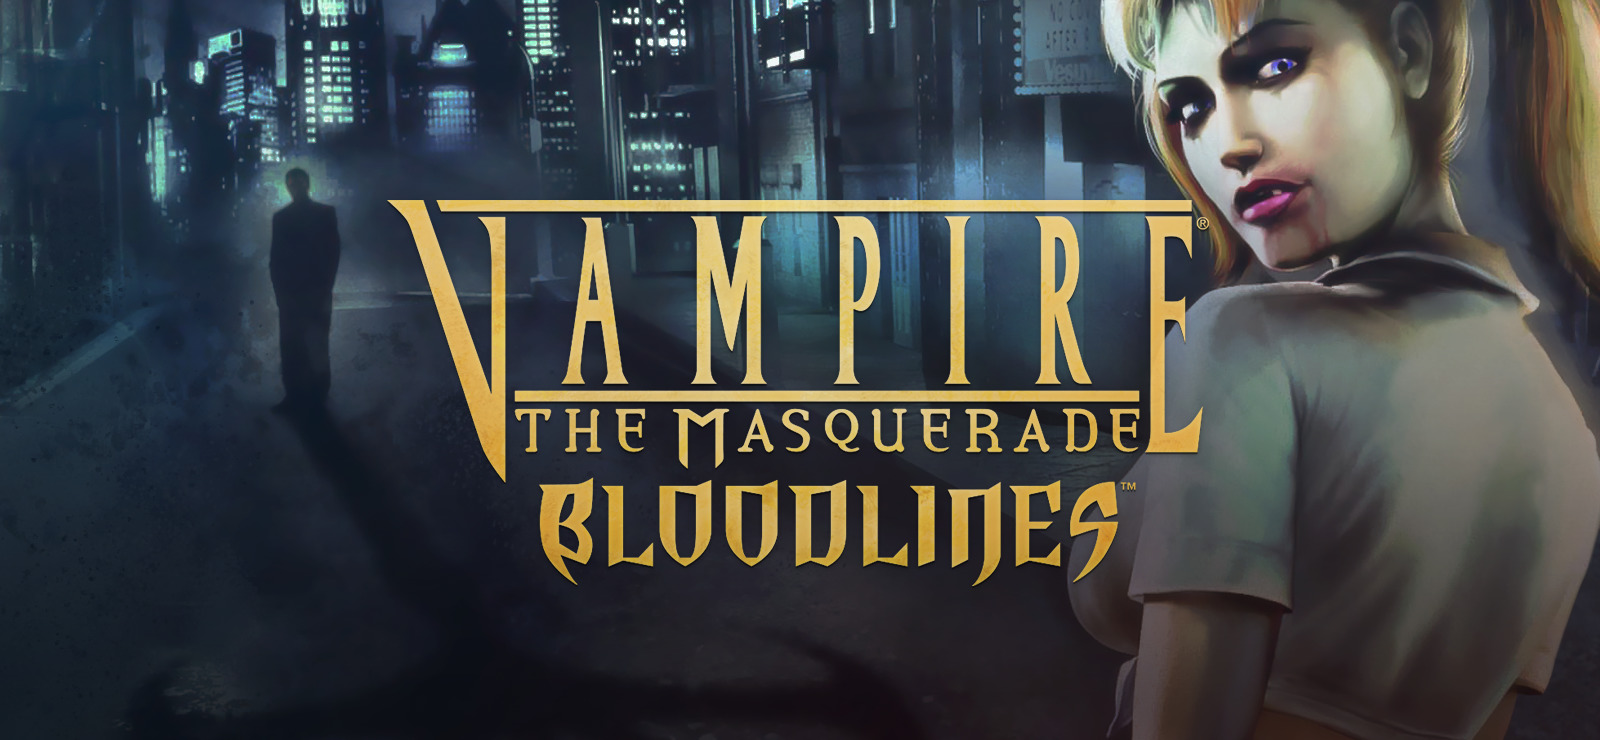 download vampire bloodlines